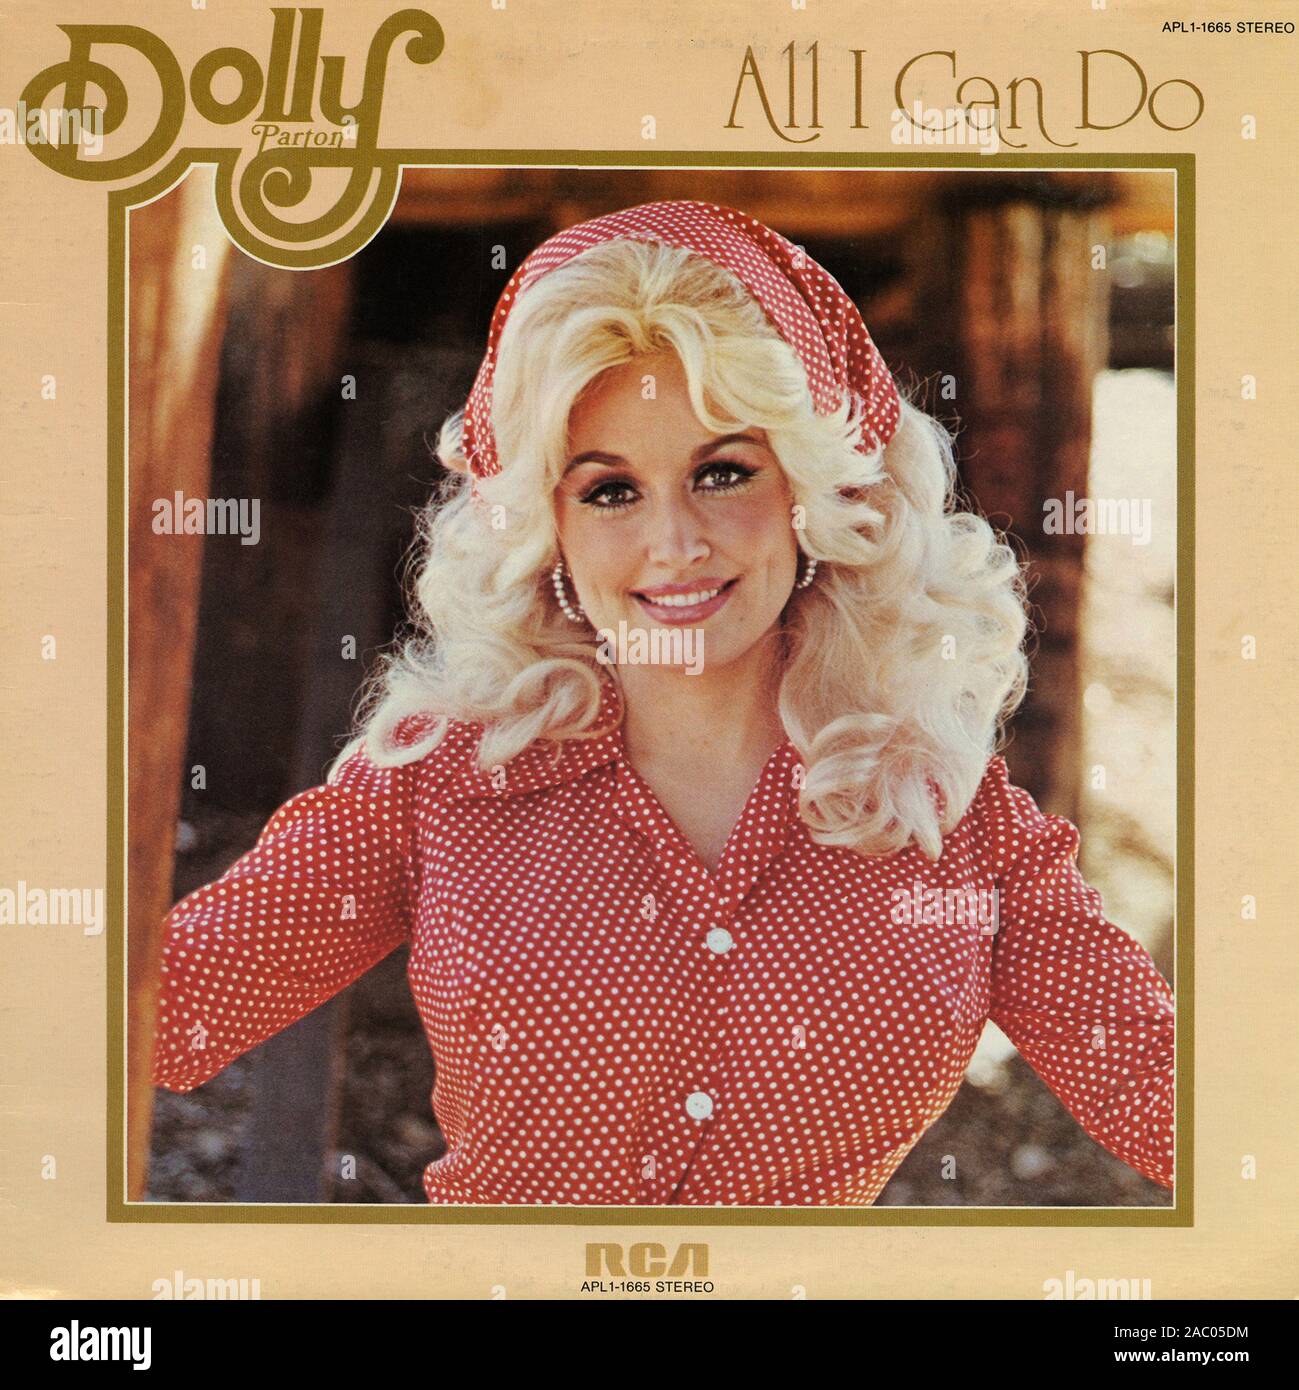 Dolly Parton - All I Can Do - Vintage vinyl album cover Stock Photo